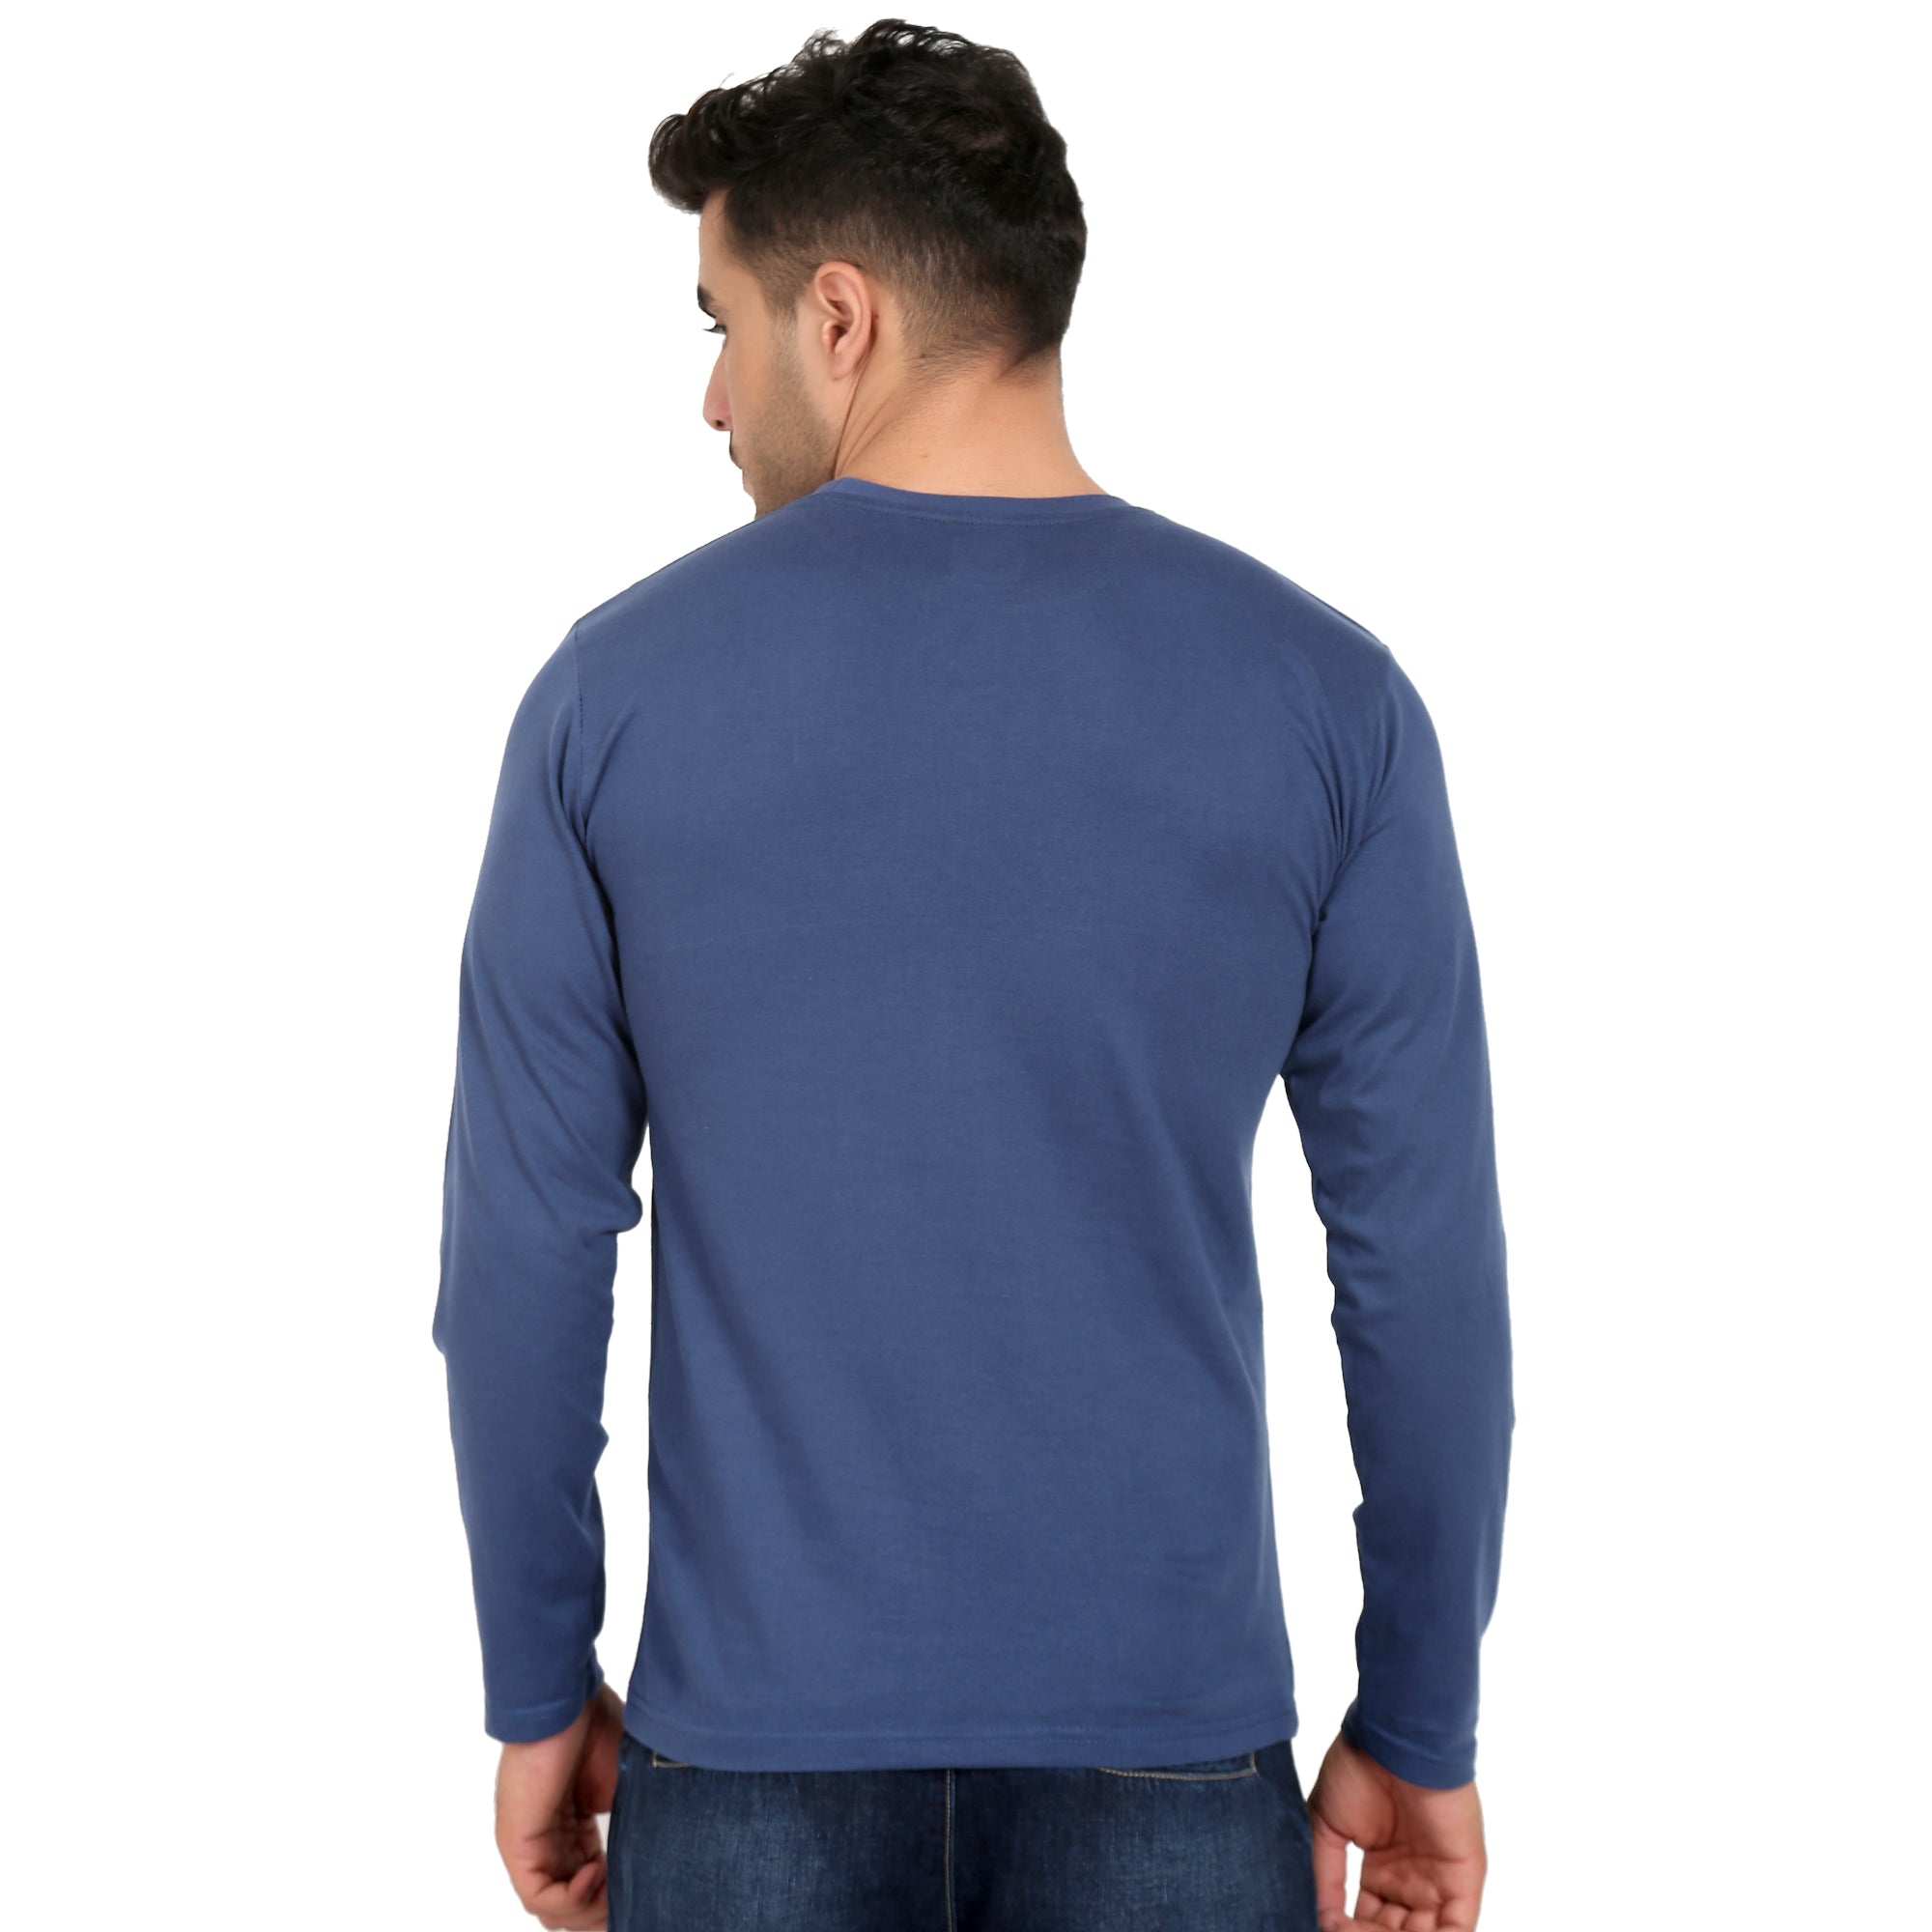 Men Crew Neck Cotton T-Shirts - Full Sleeves, Blue Colour